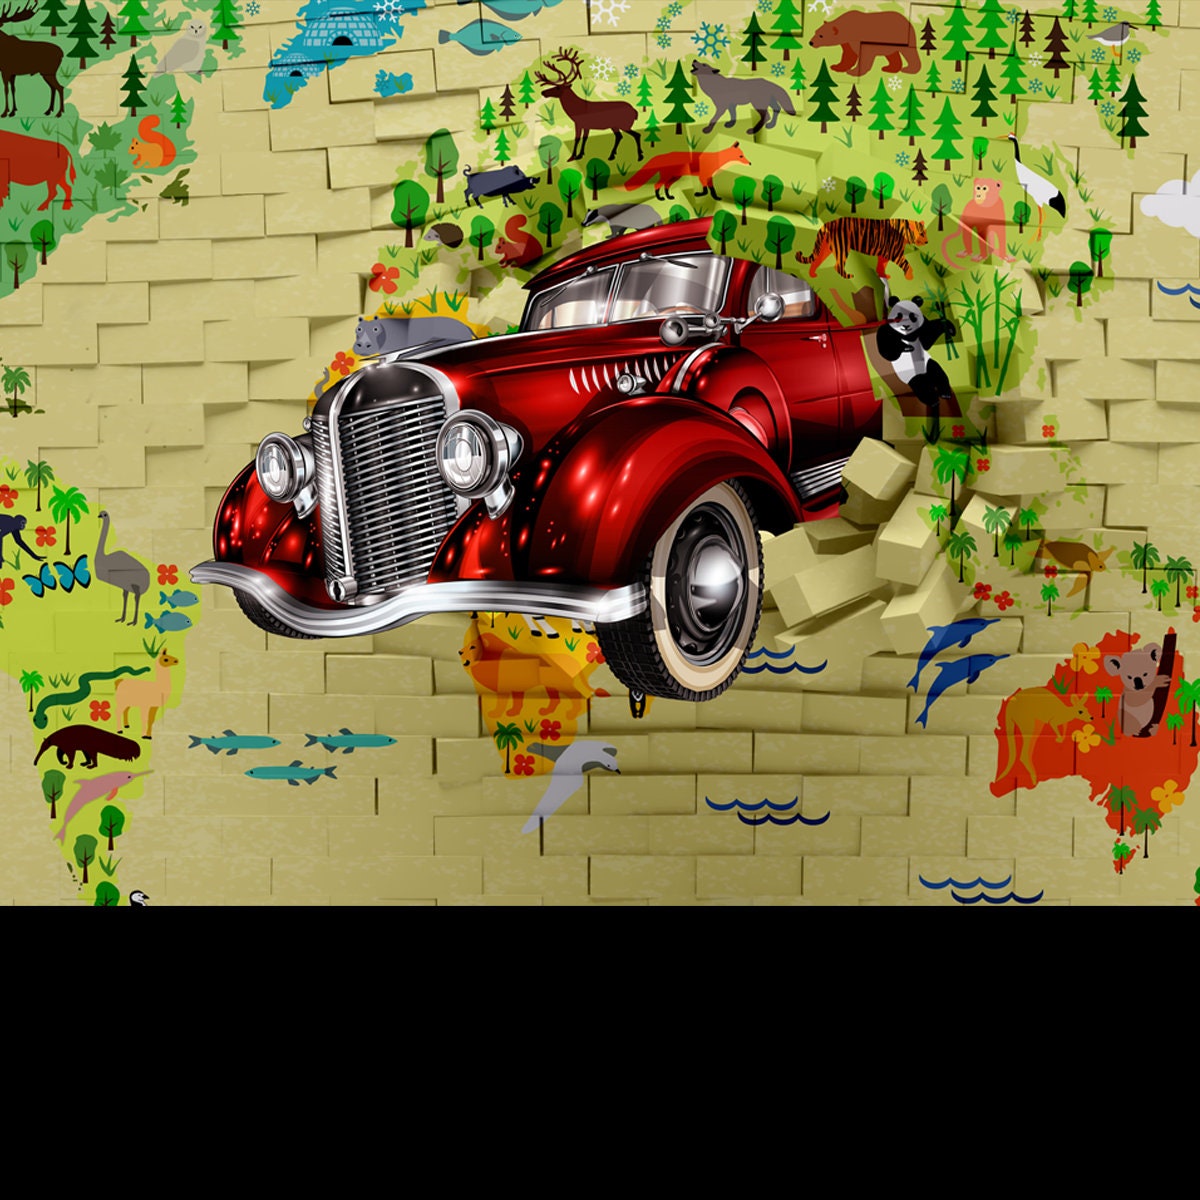 3d Mural Wallpaper Broken Wall Bricks and Red Classic Car Wallpaper Boy Bedroom Mural